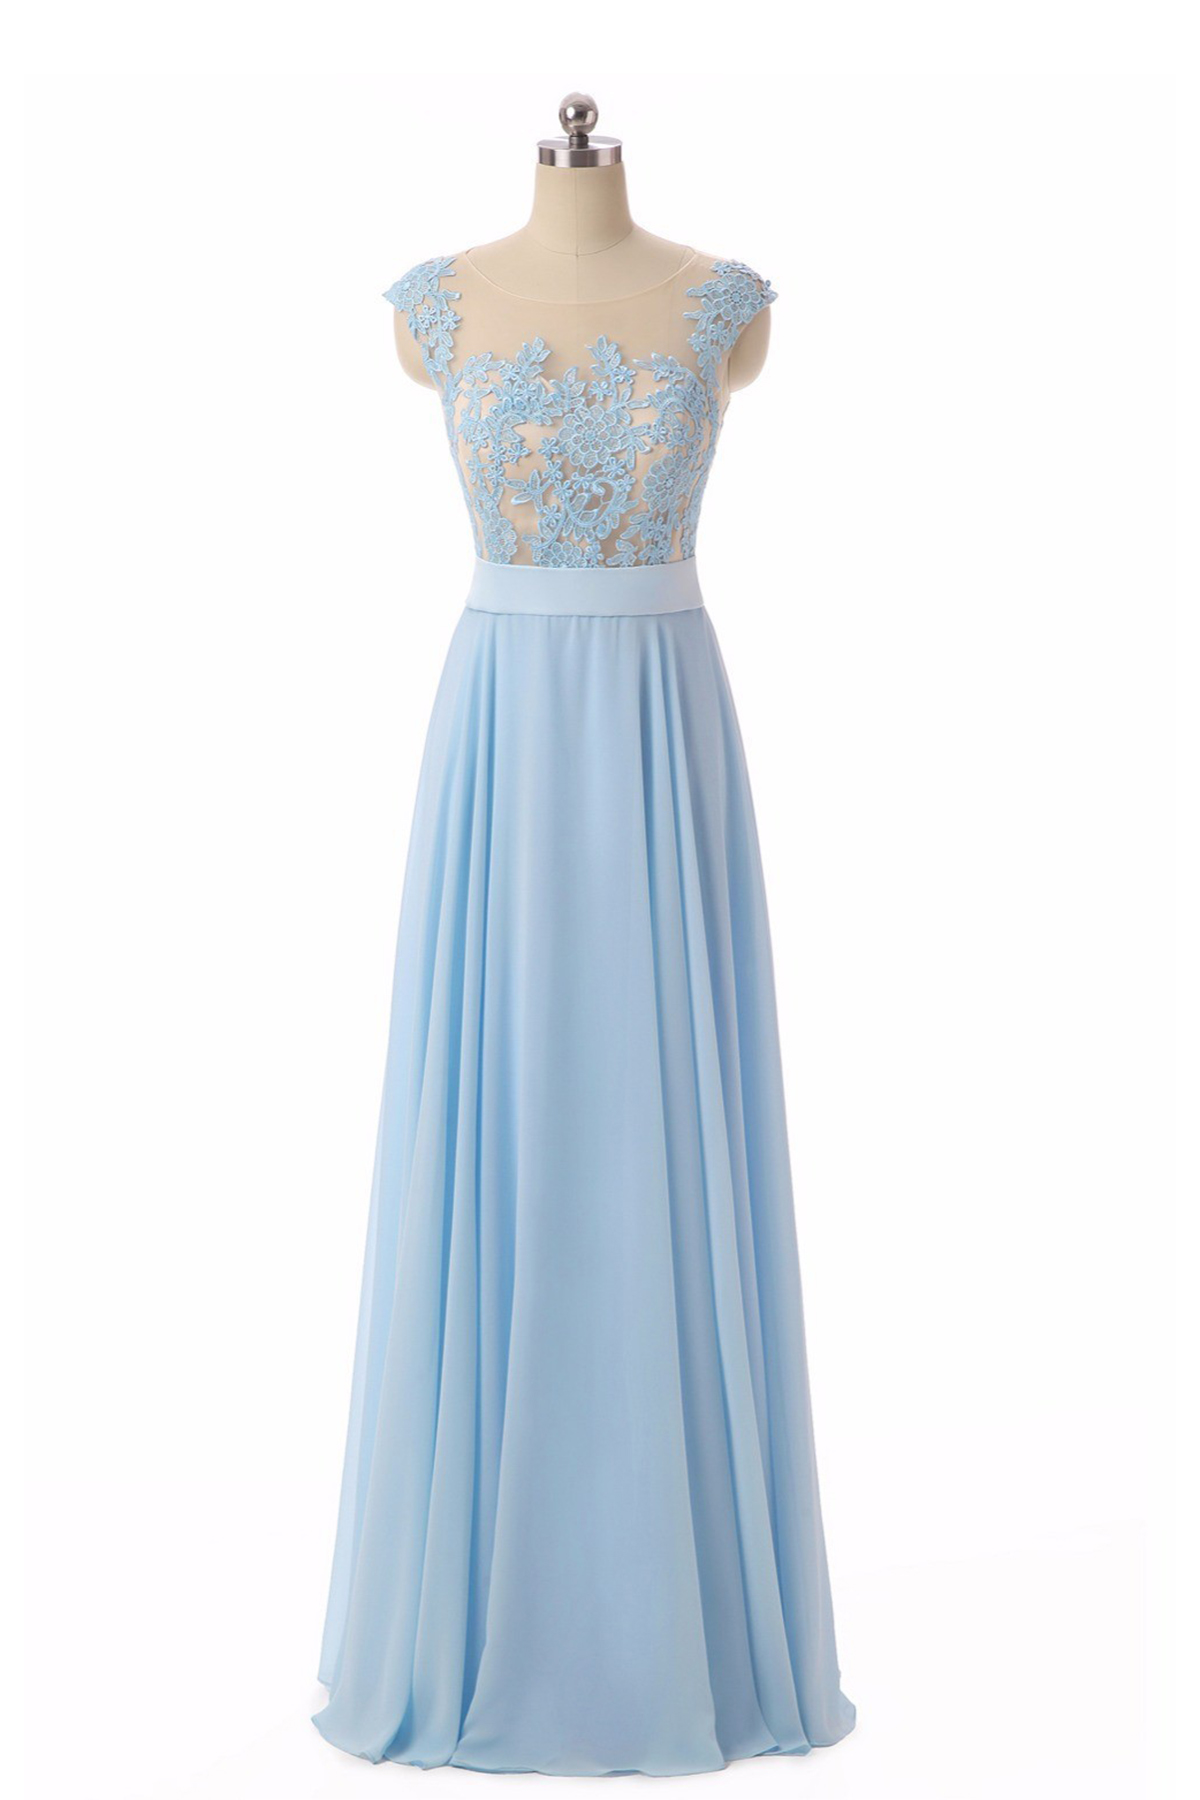 Light Blue Chiffon Long Lace Appliqués Senior Prom Dress, Light Blue Bridesmaid Dresses